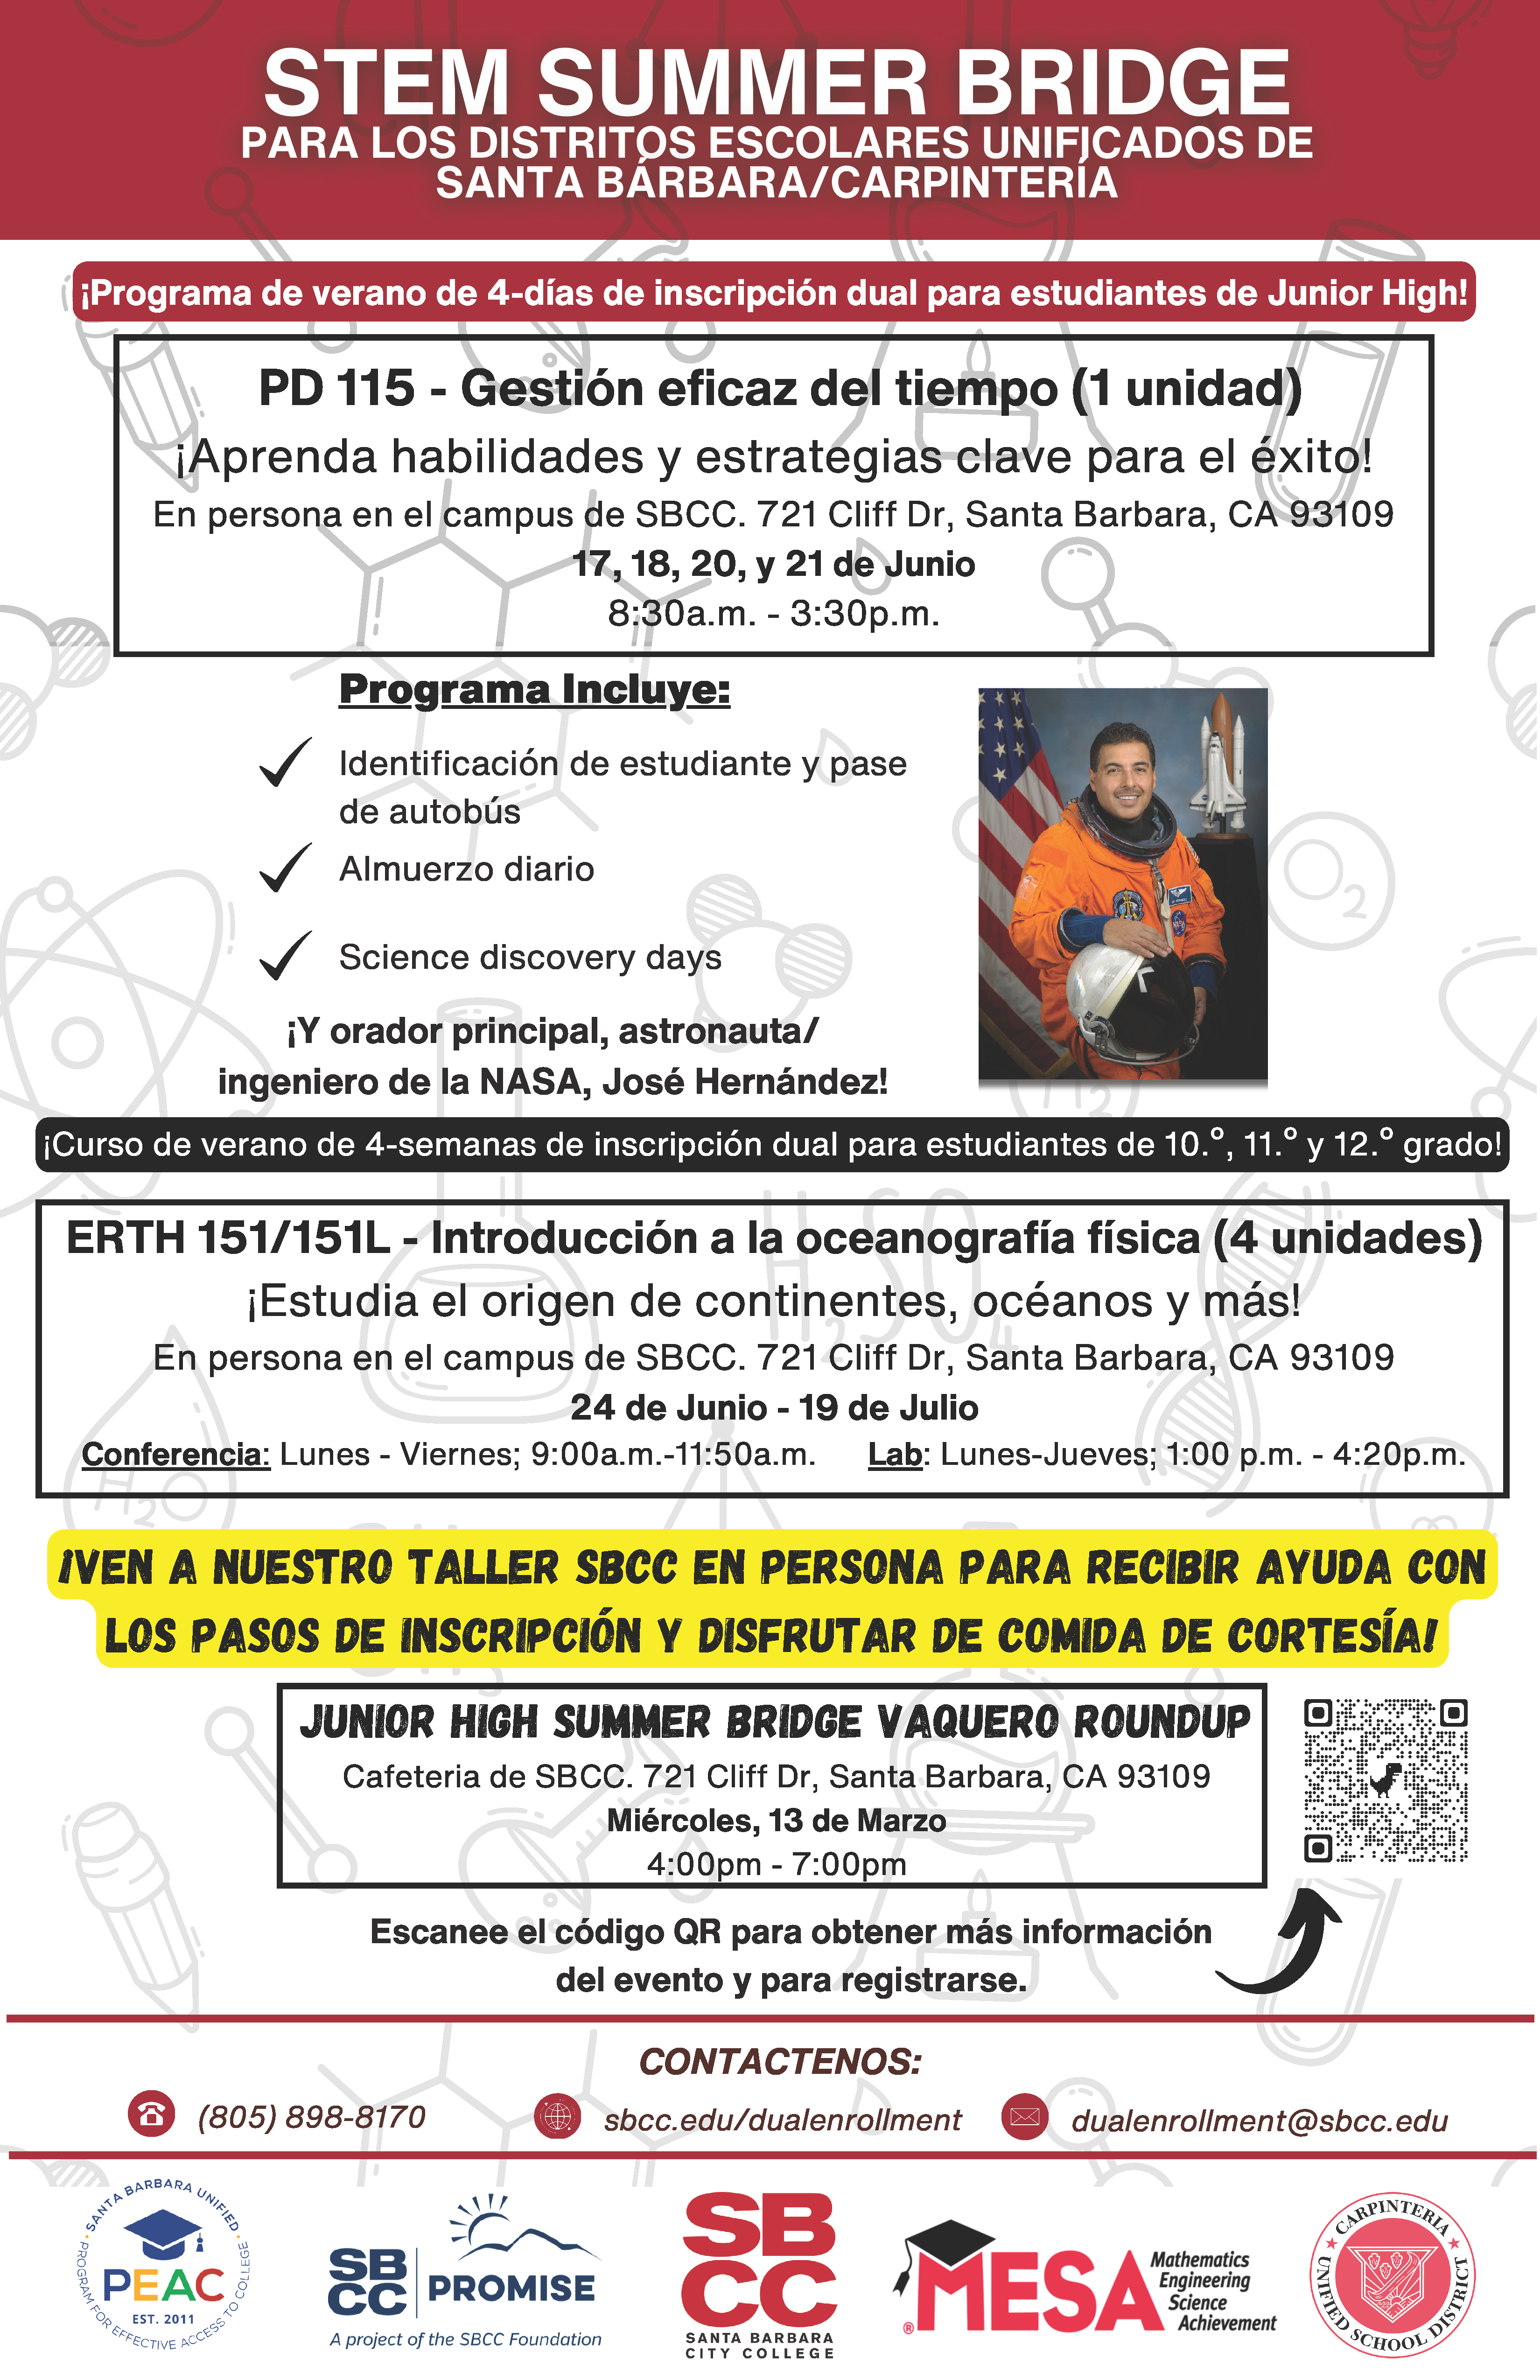 Summer Bridge Vaquero Round Up Flyer Spanish - Click for PDF